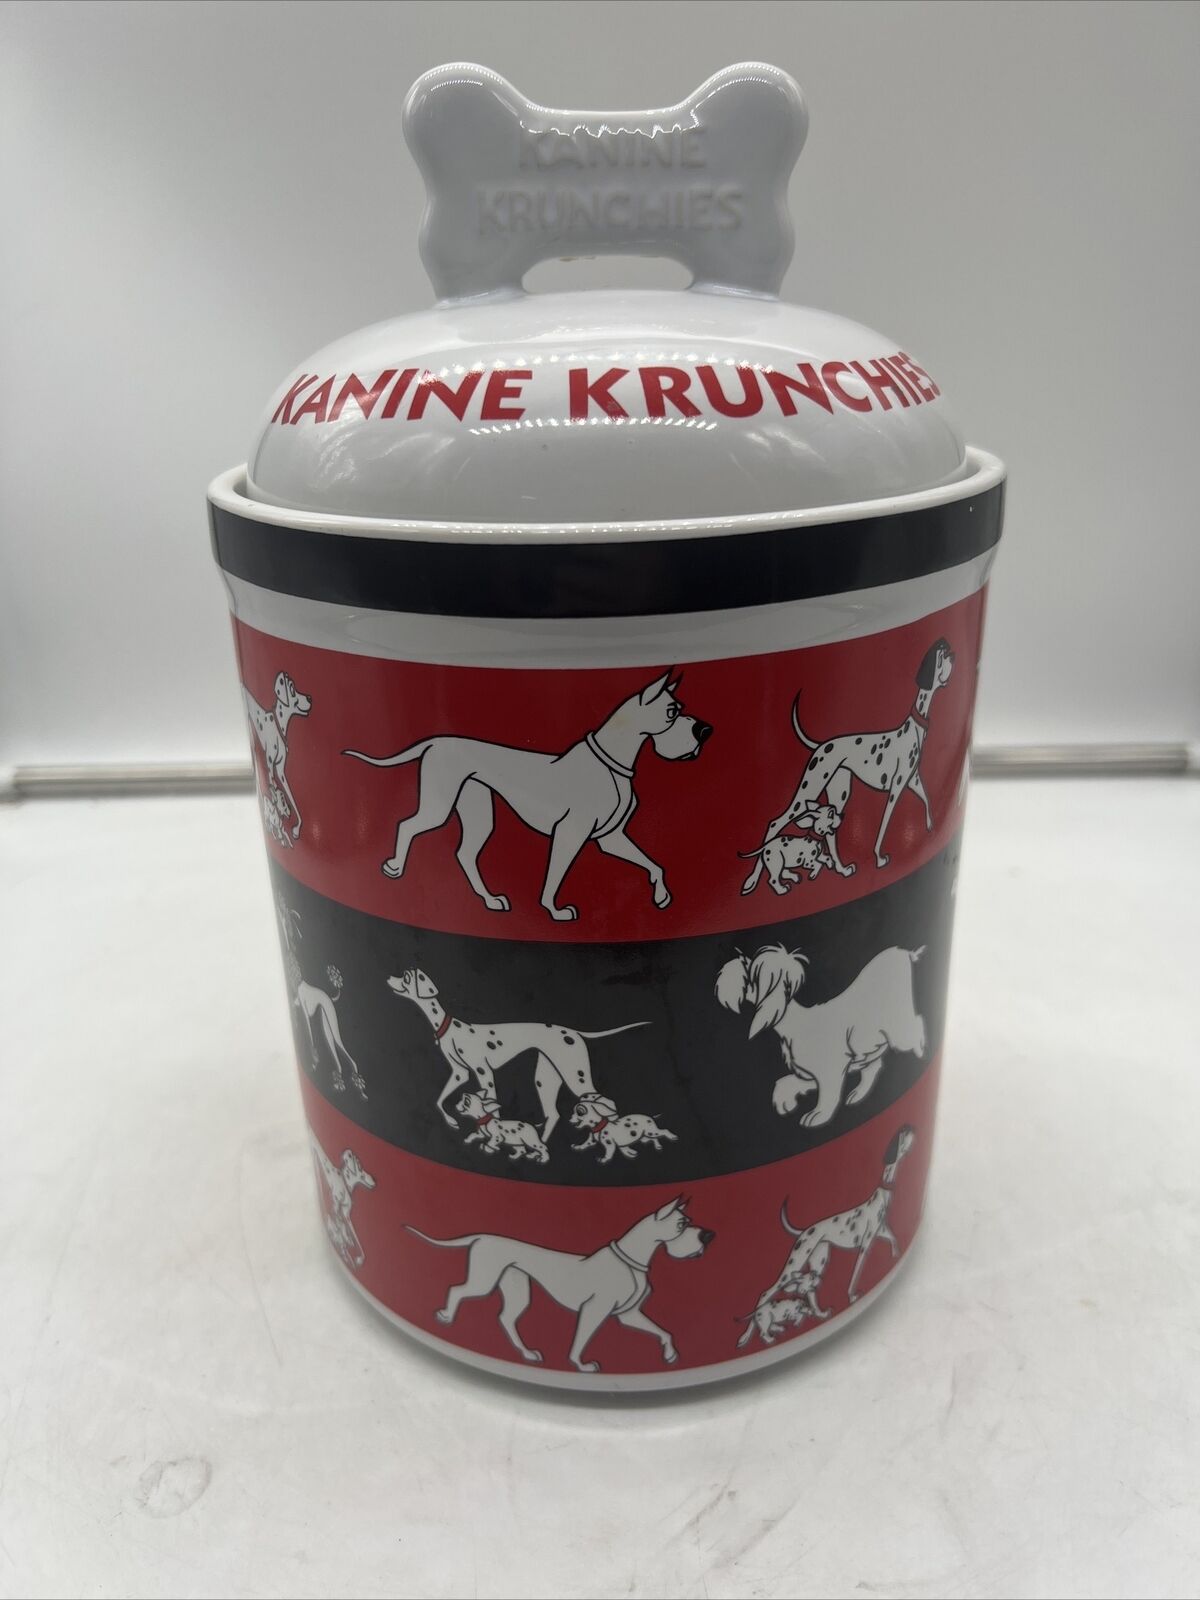 RARE Disney 101 Dalmatians Kanine Krunchies Ceramic Dog Biscuit Cookie Jar